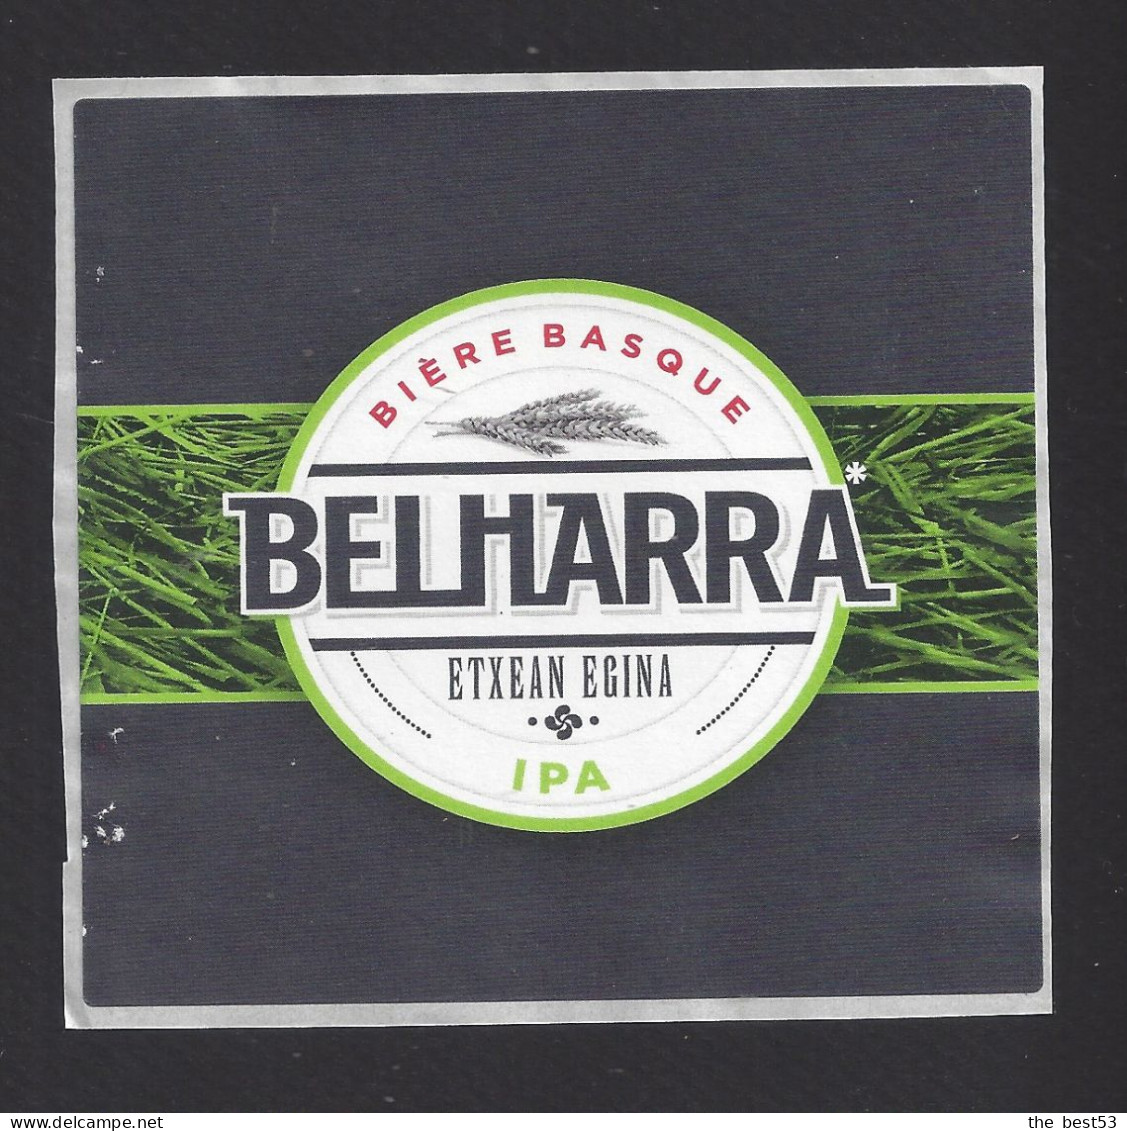 Etiquette De Bière IPA  -  Brasserie Belharra  à  Bayonne   (64) - Beer